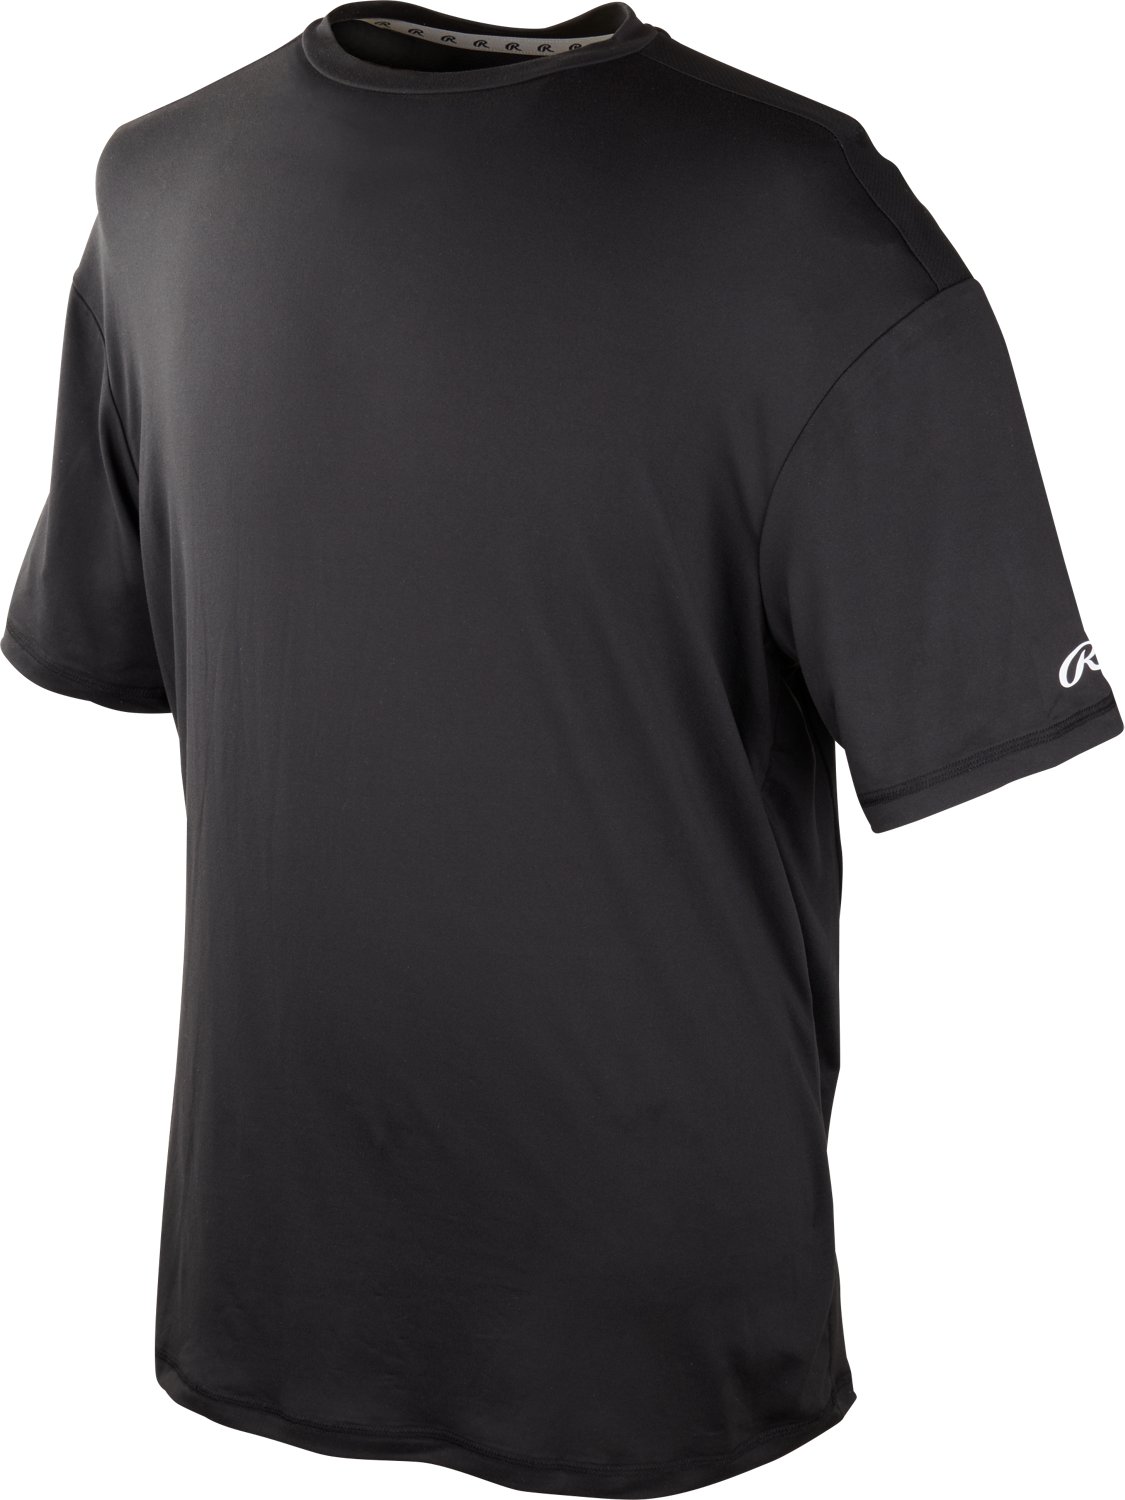 Rawlings Mens Athletic Fit Short Sleeve Shirt